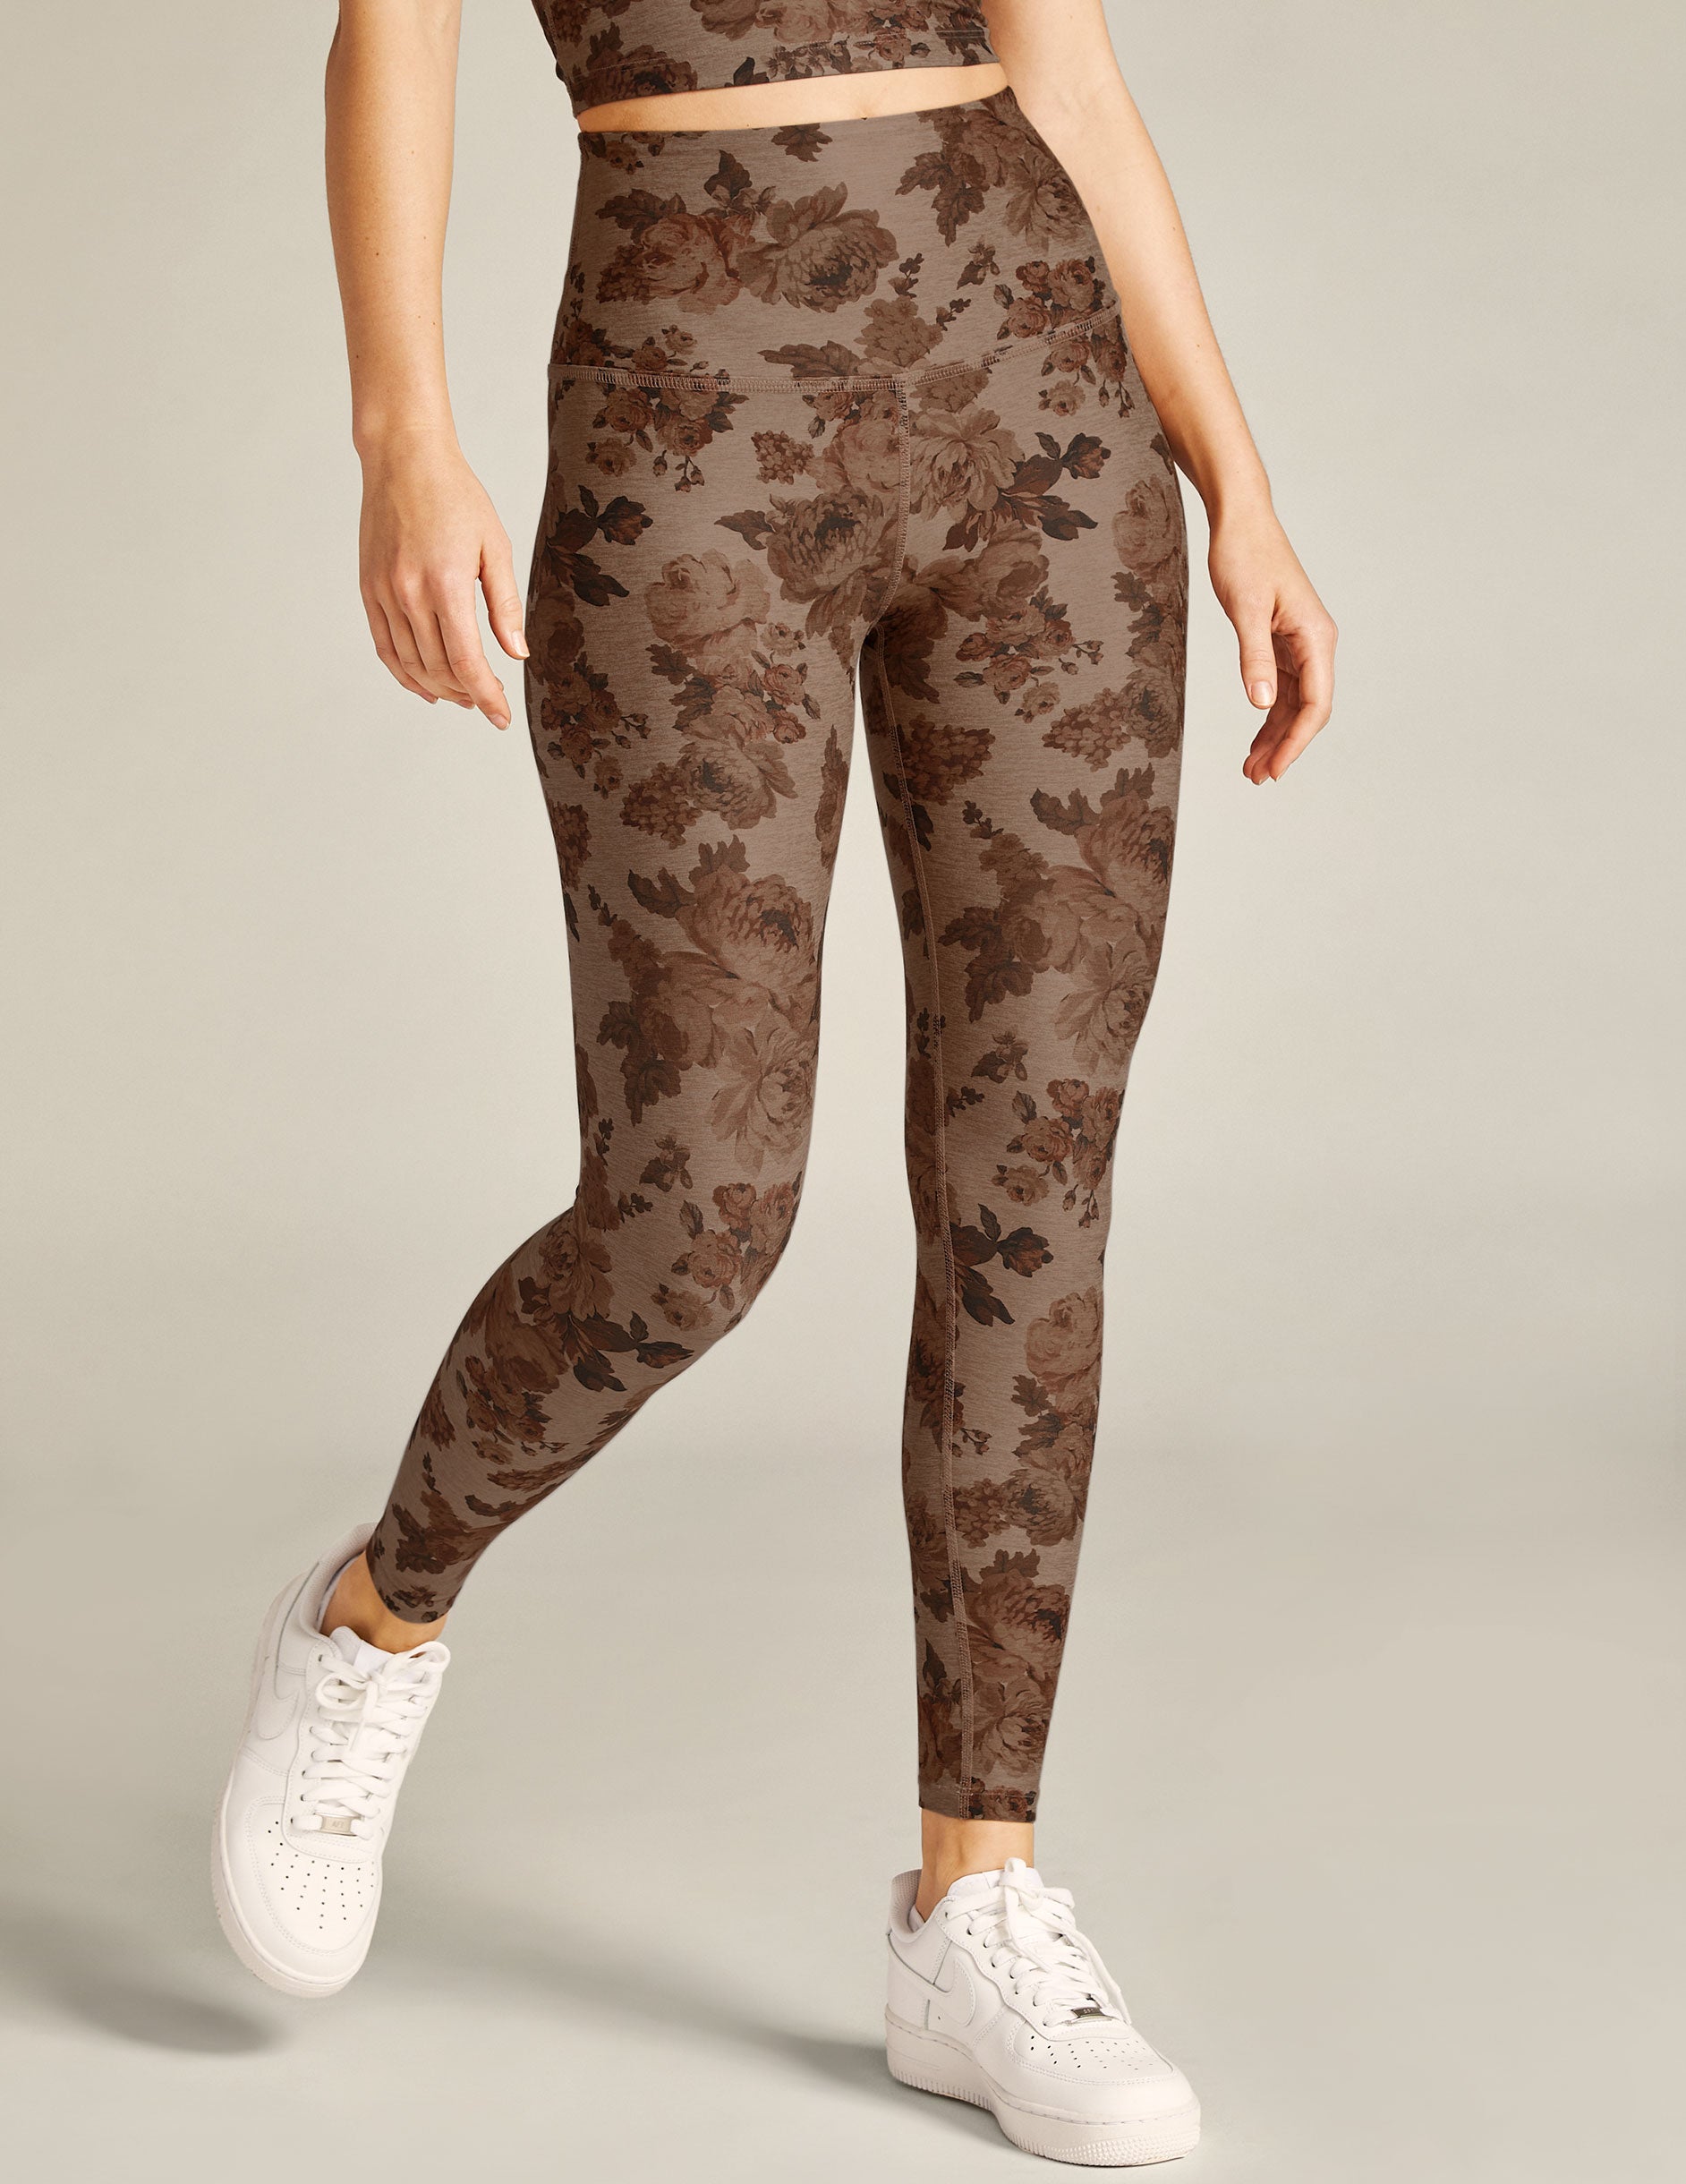 brown floral printed high-waisted midi leggings. 